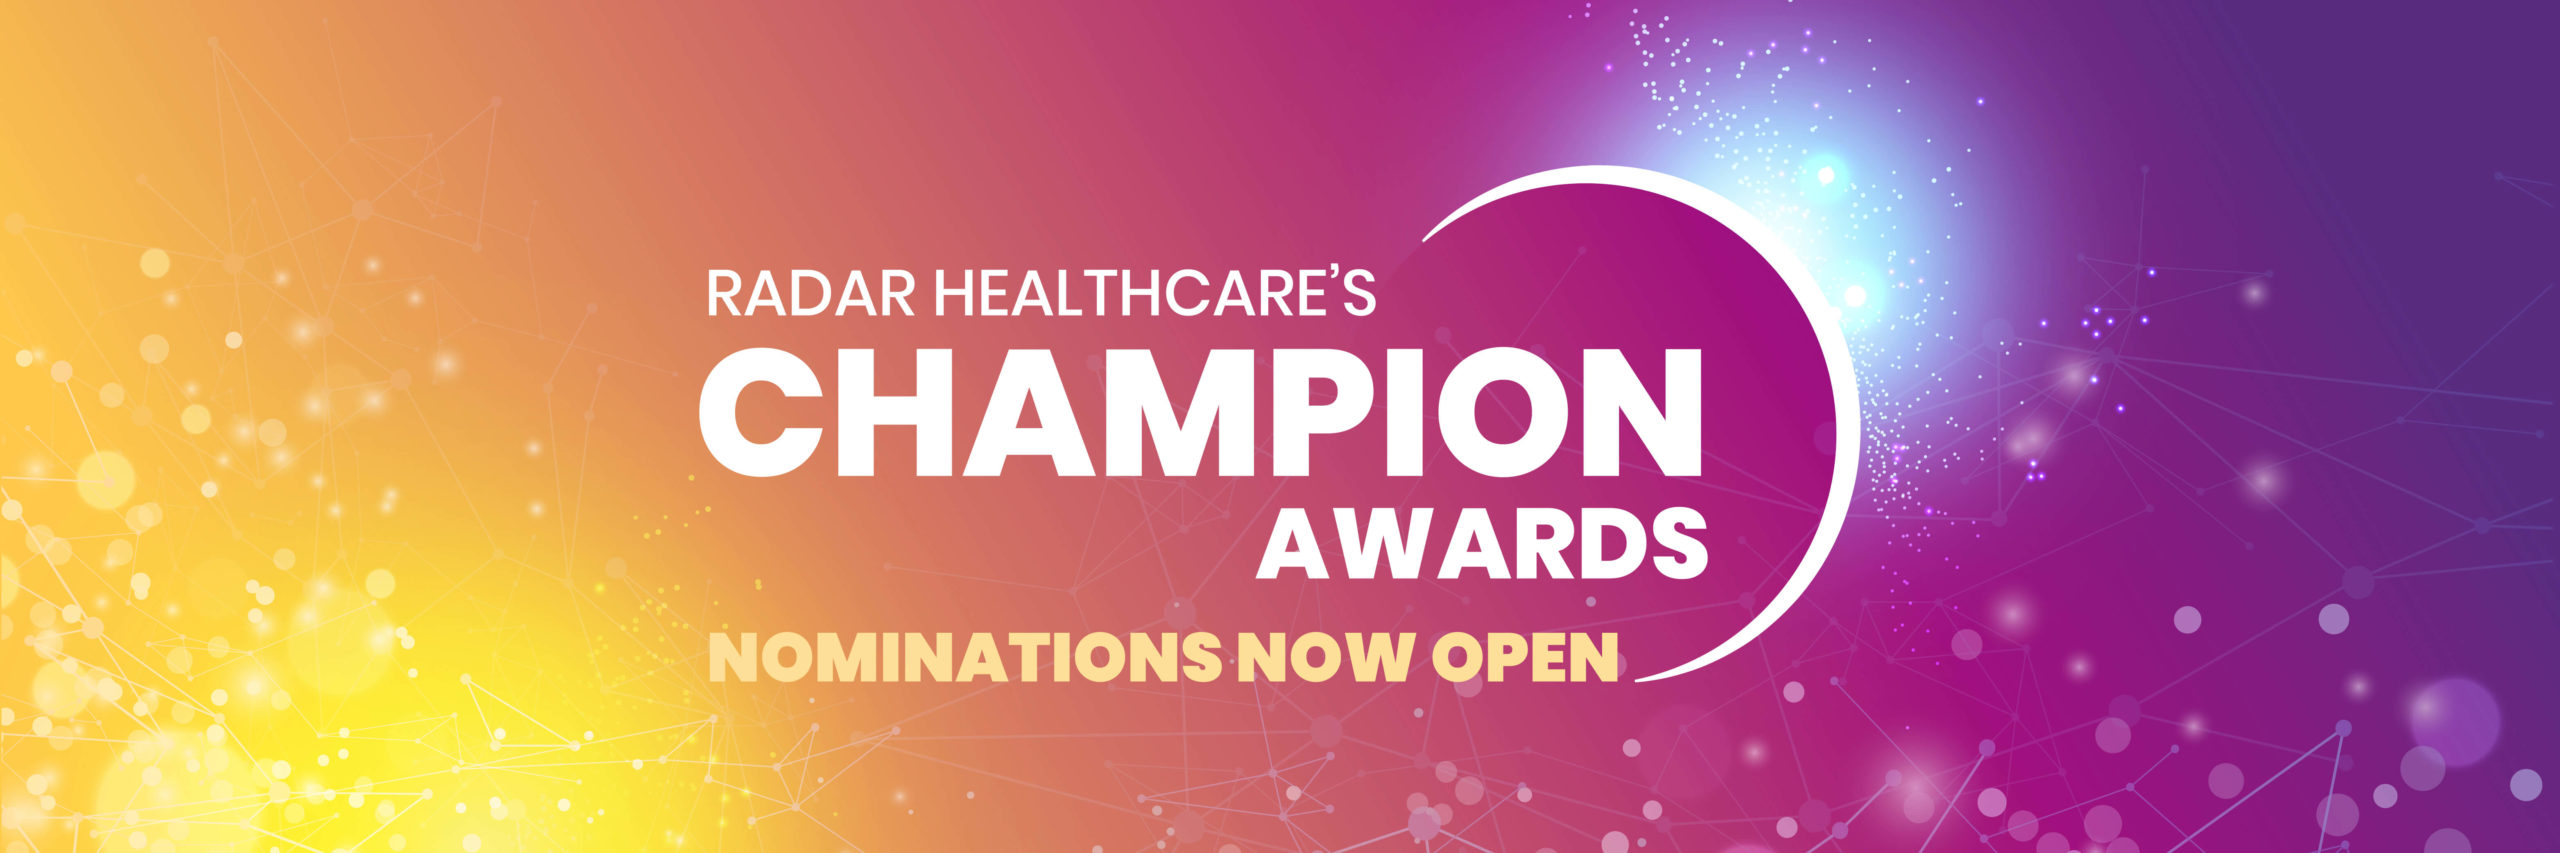 Radar Healthcare's Champion Awards